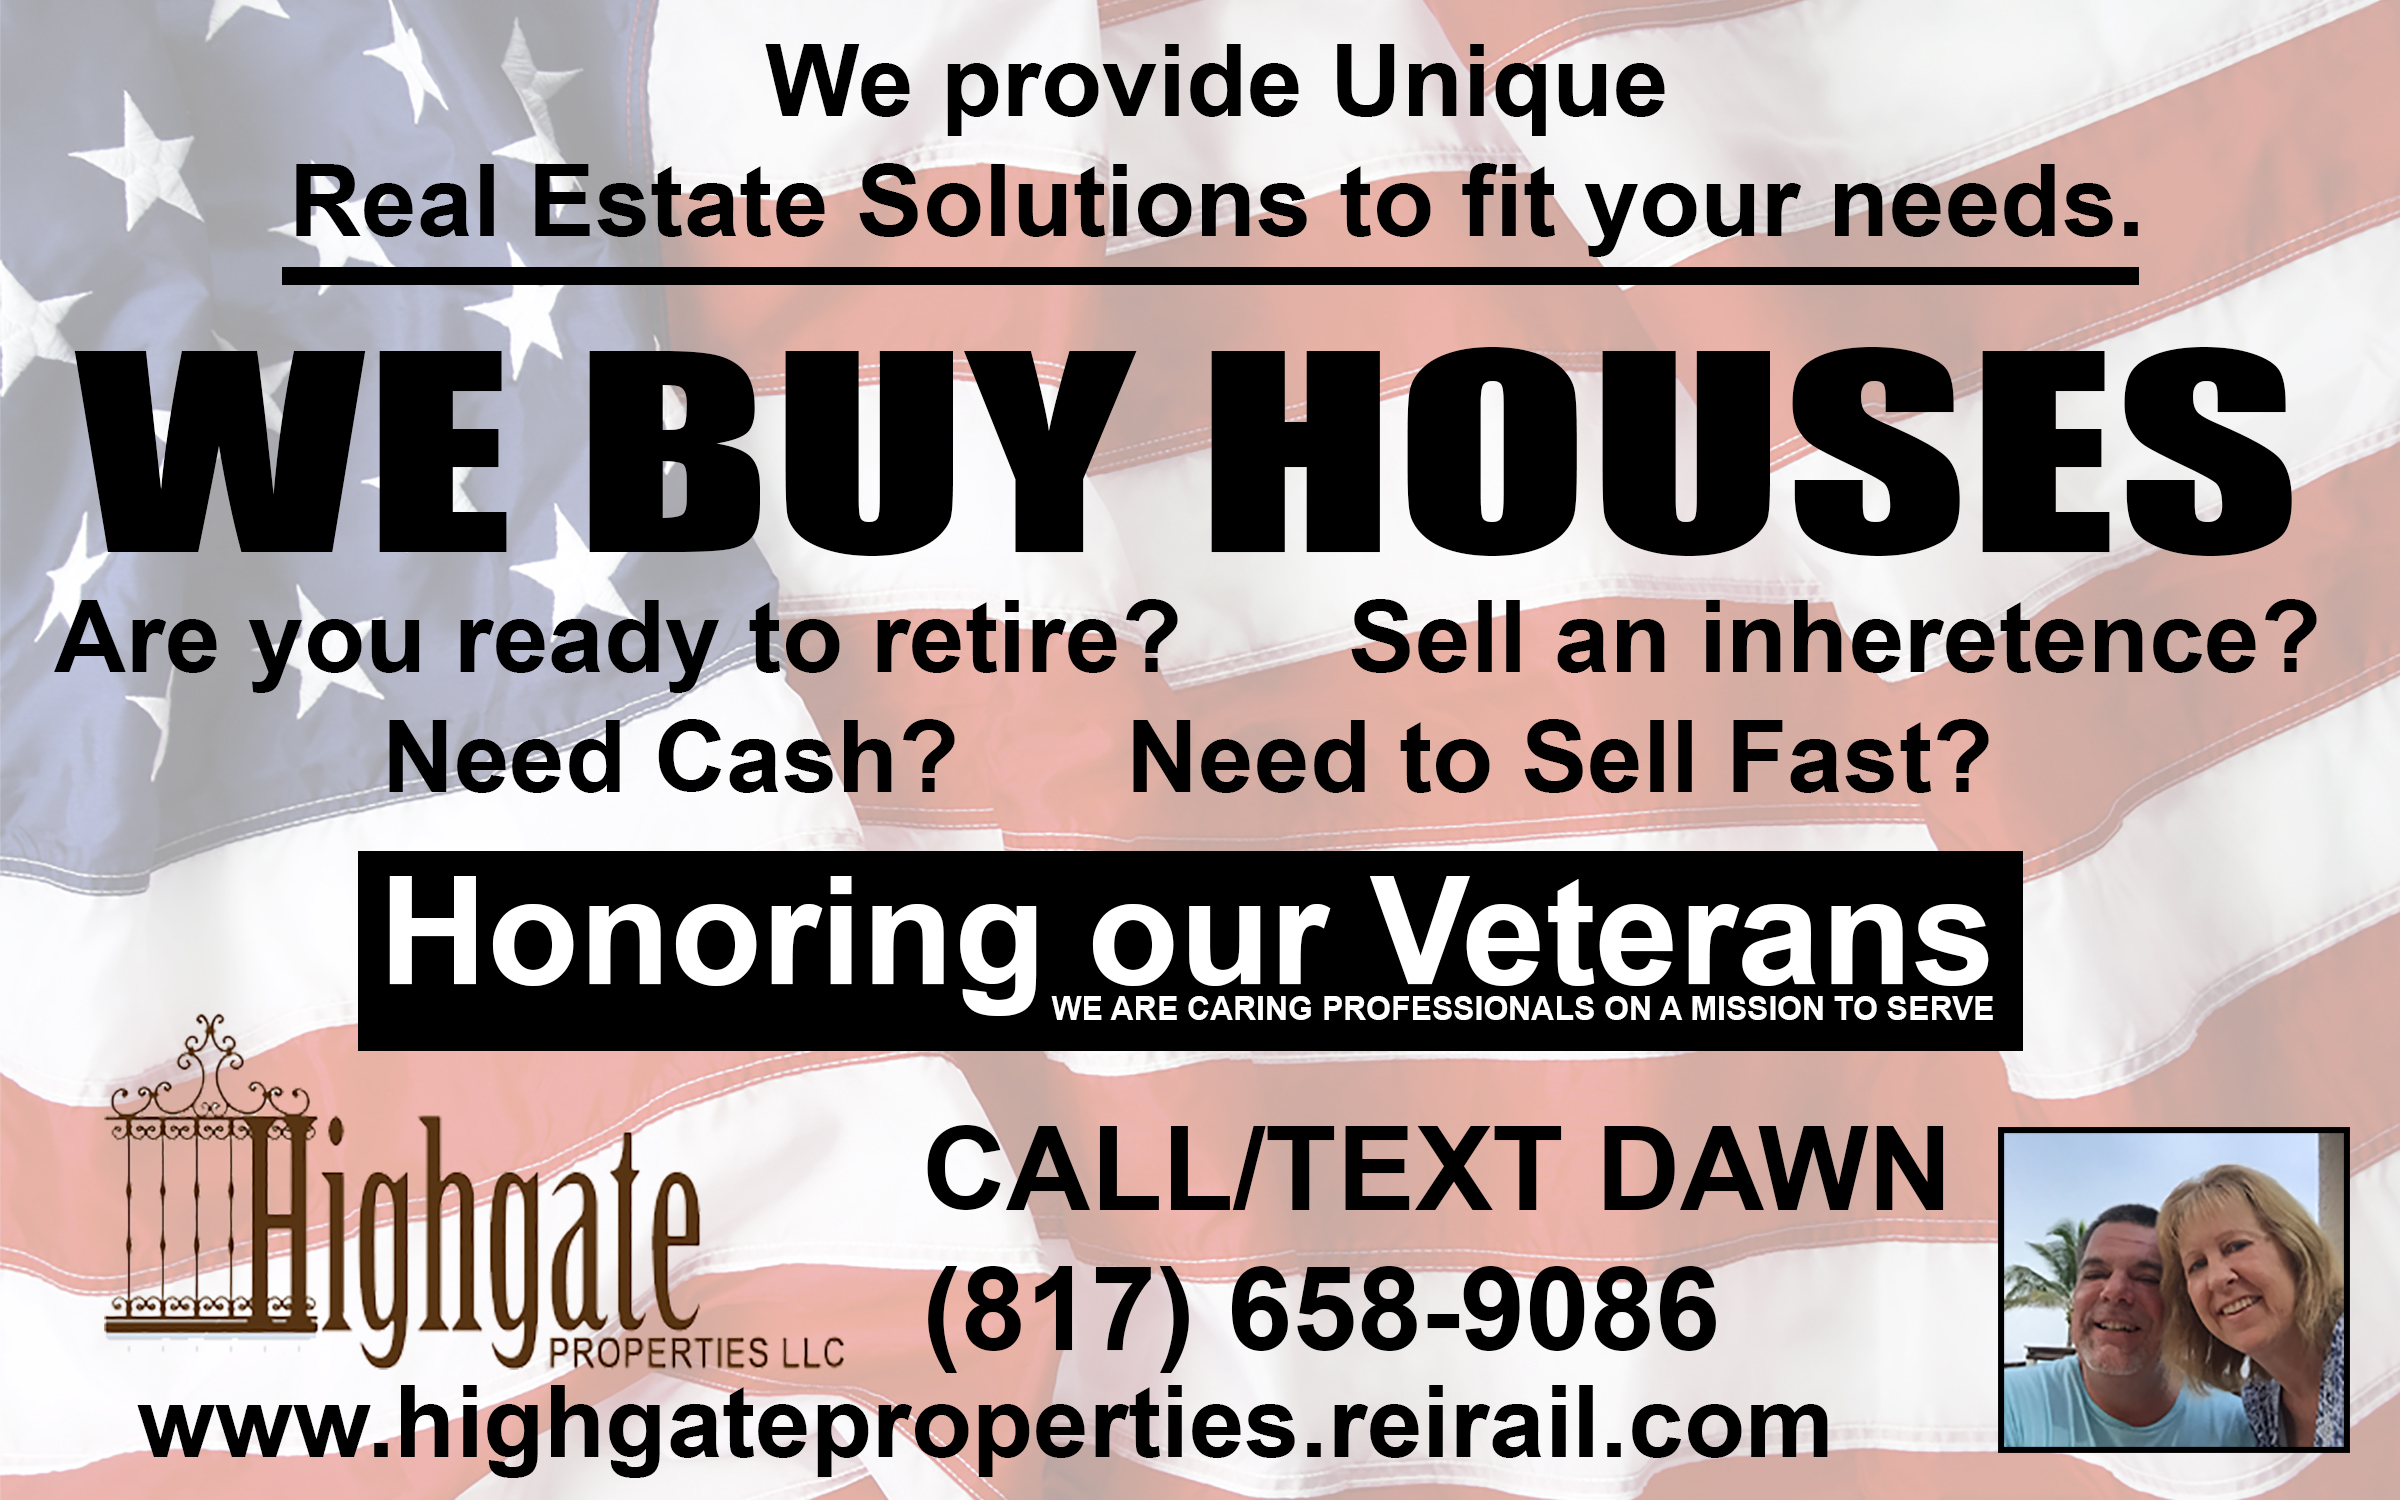 Highgate Properties LLC